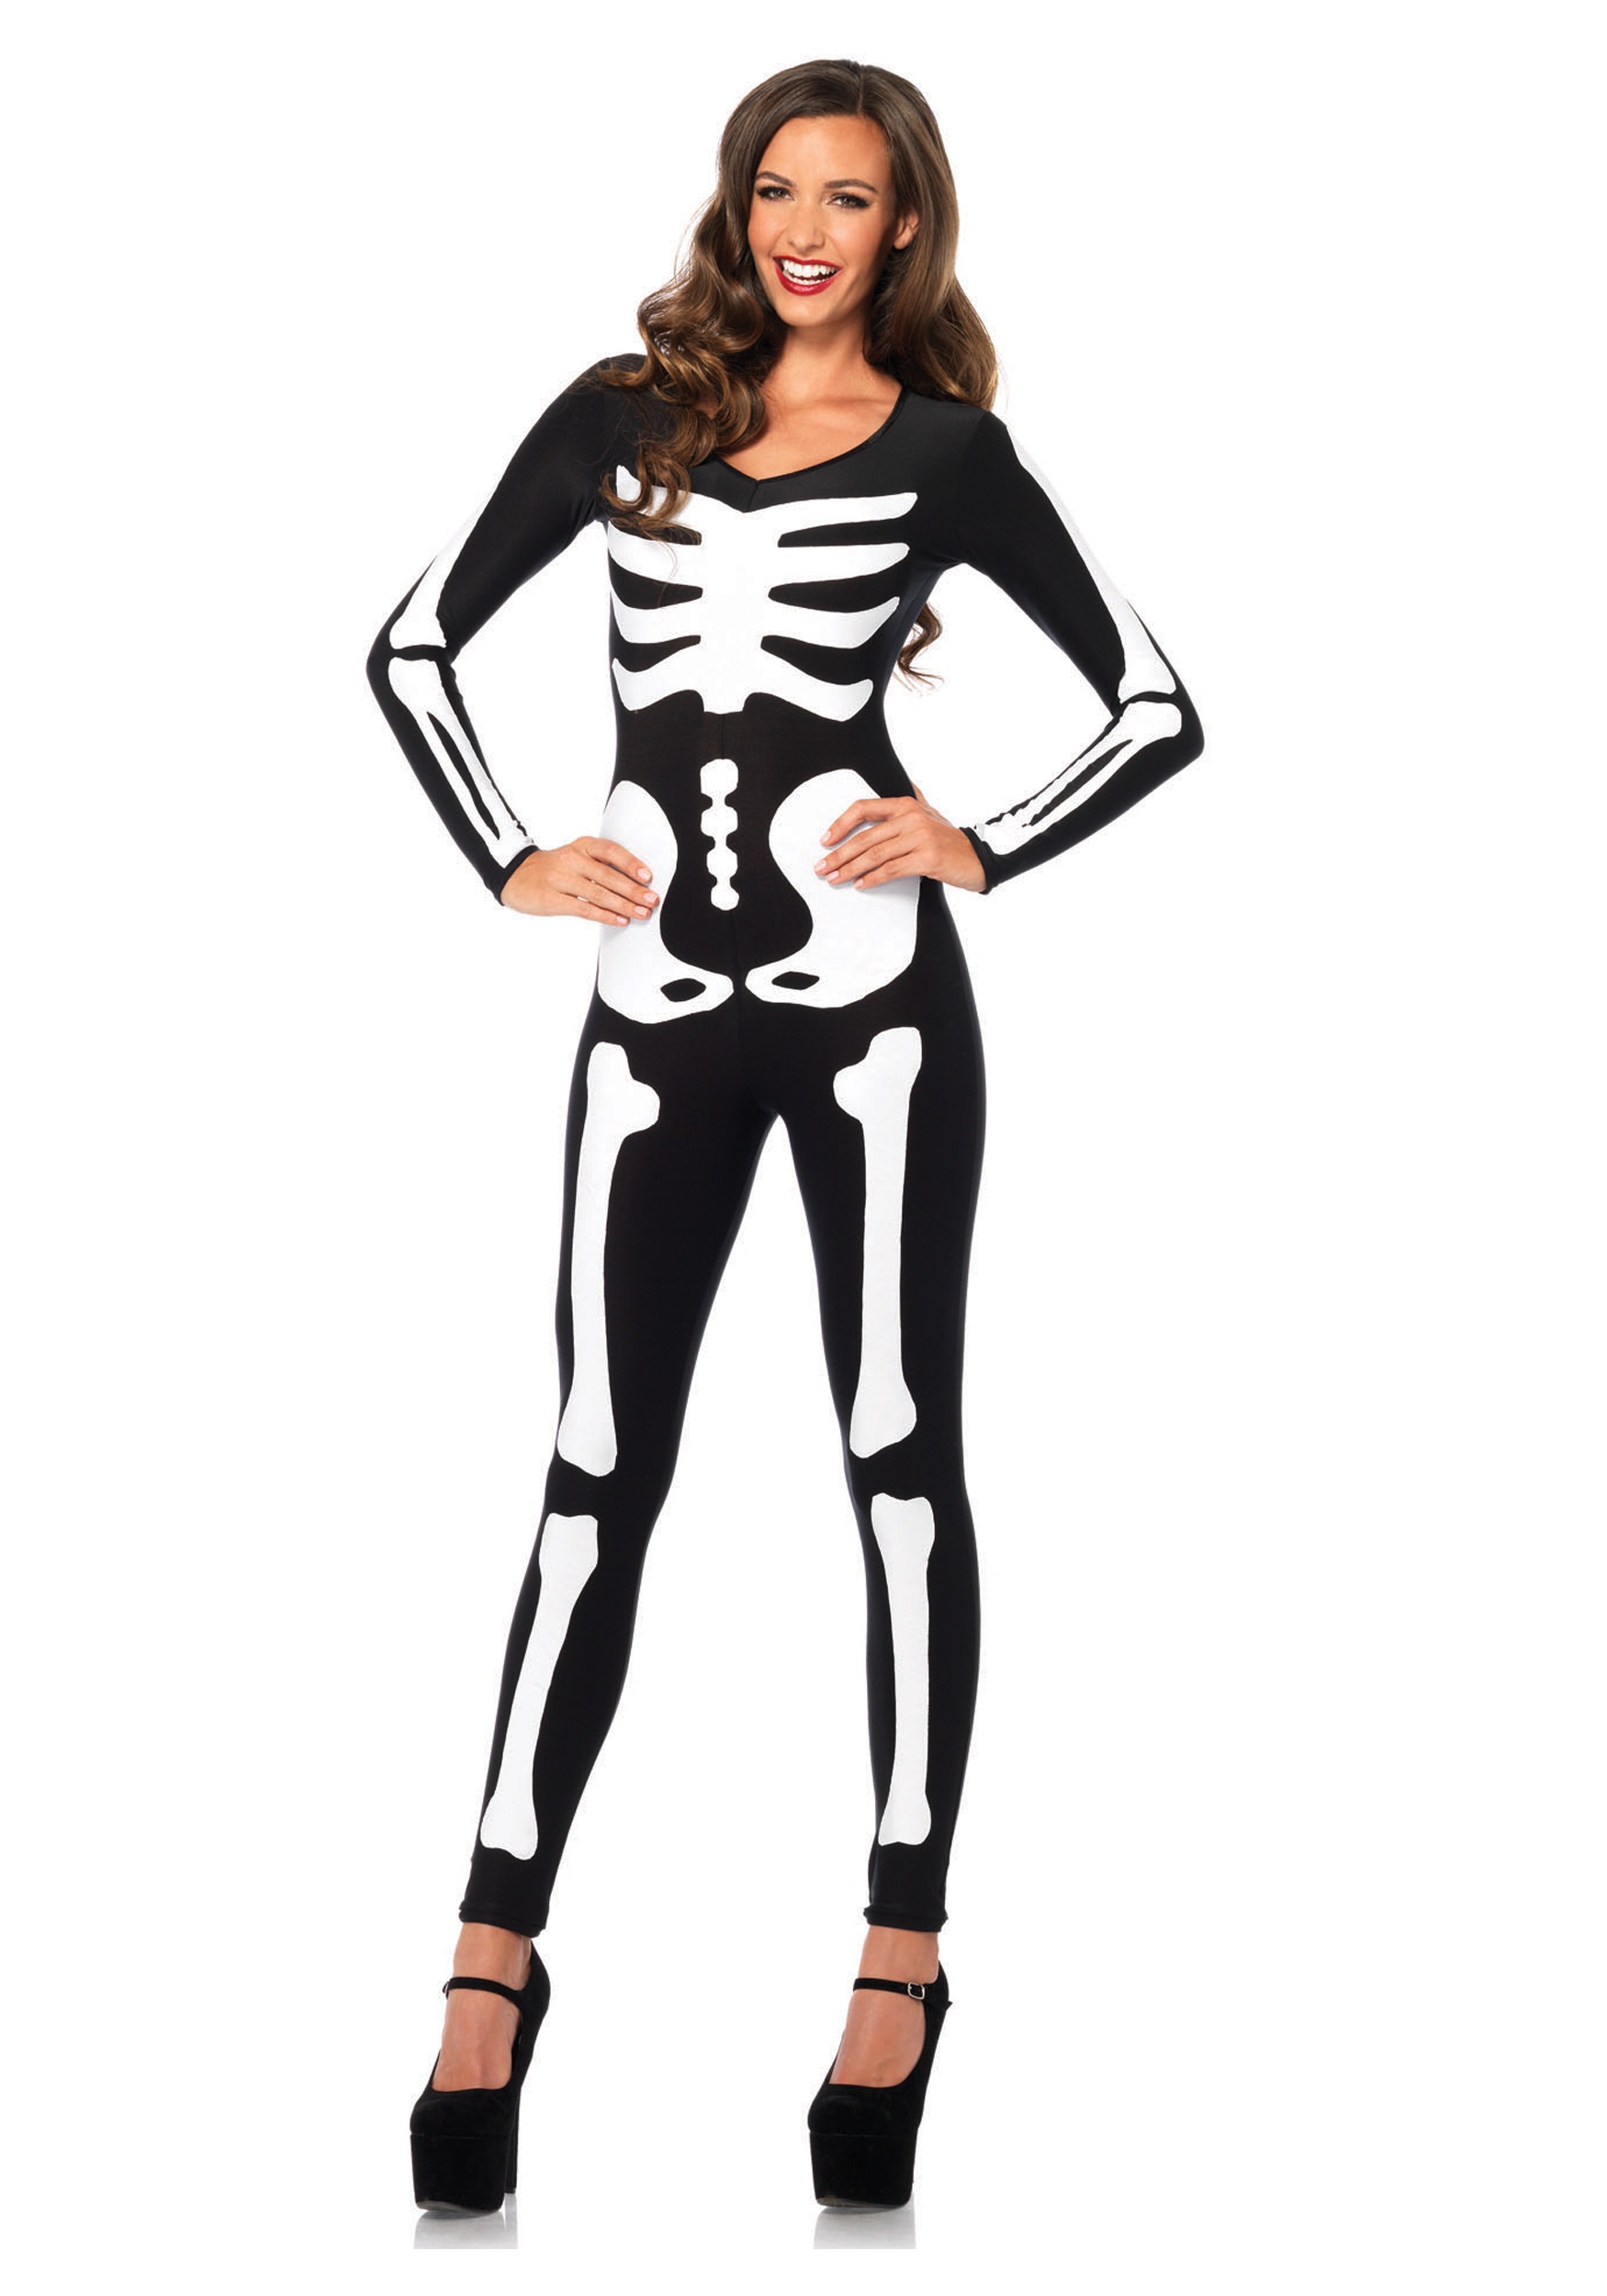 Set of Skeleton costume Human bones on bodysuit front back view